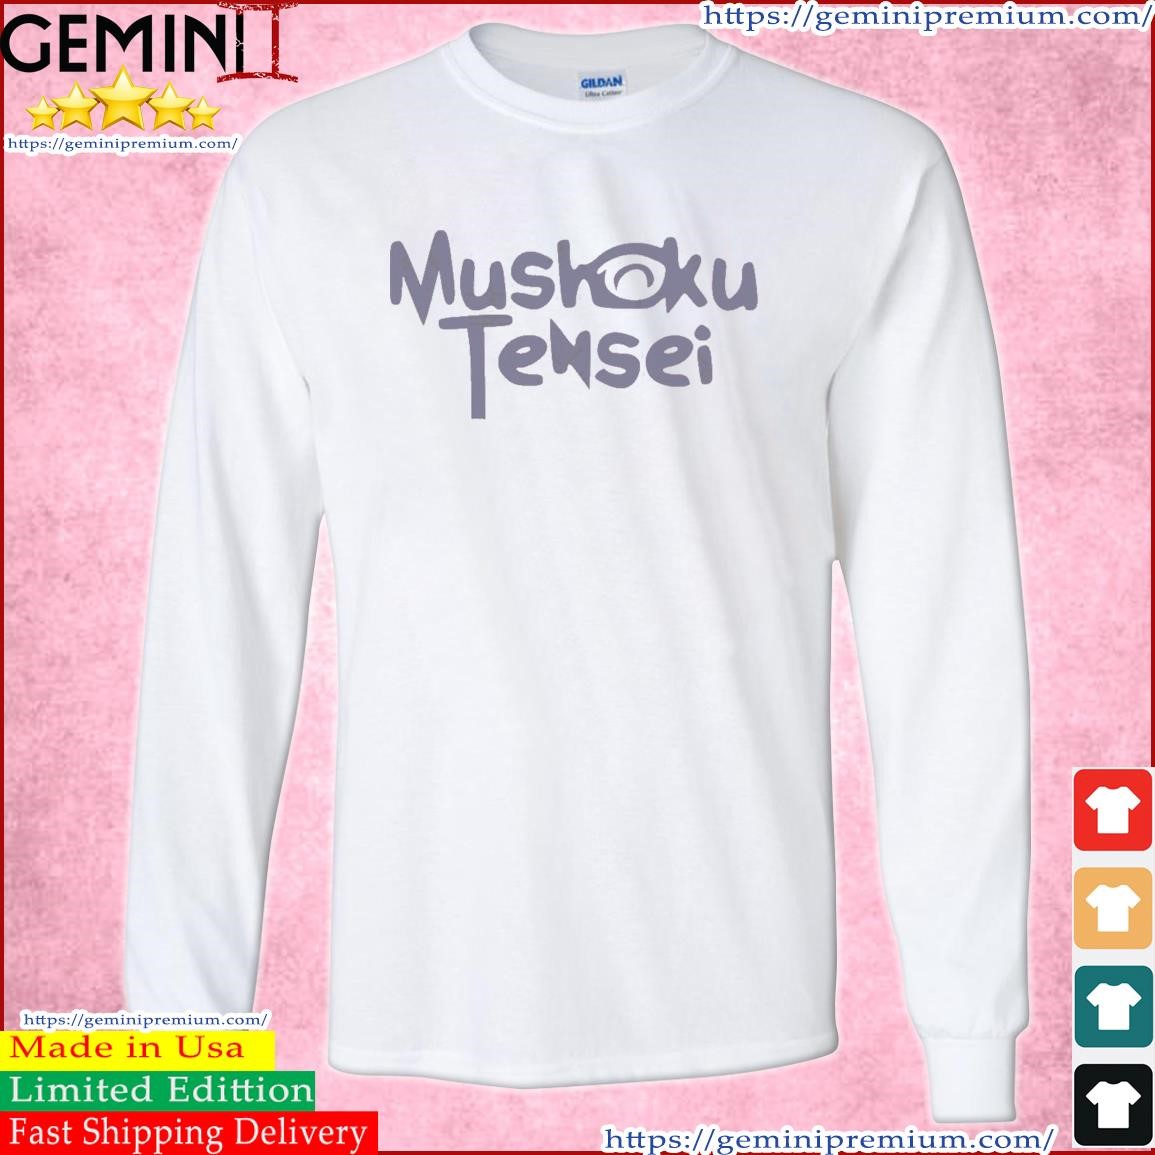 Mushoku Tensei Logo Text Shirt Long Sleeve Tee.jpg